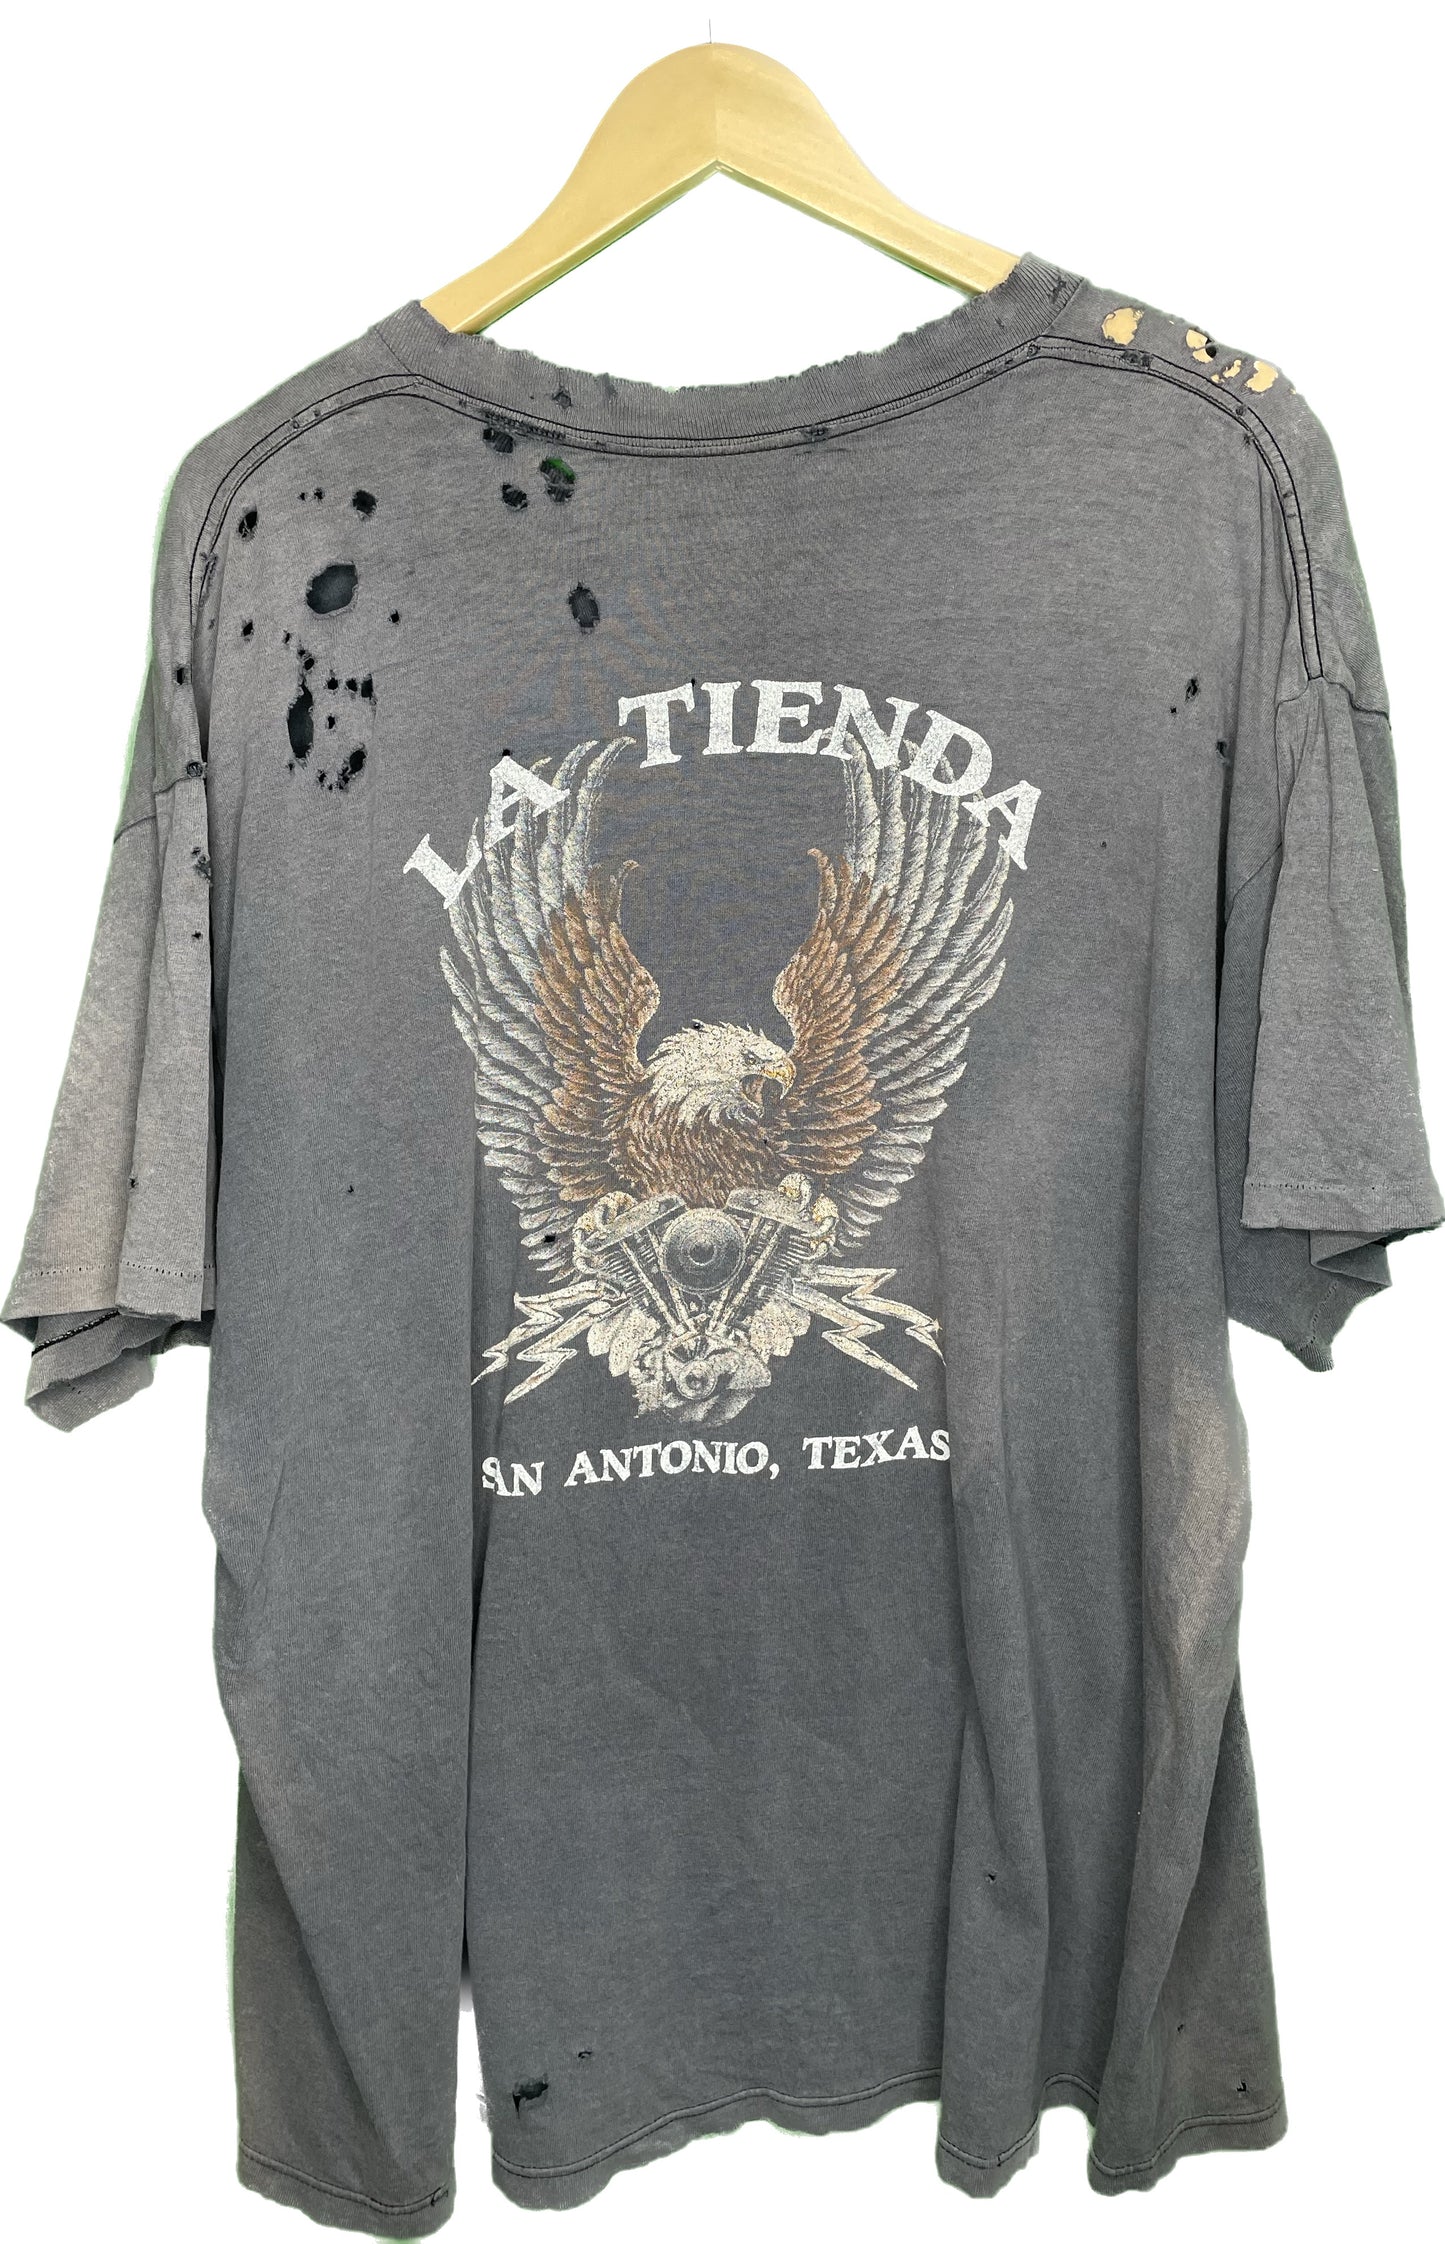 Vintage 2XL/3XL 3D Emblem Harley Davidson La Tienda San Antonio TX T-Shirt